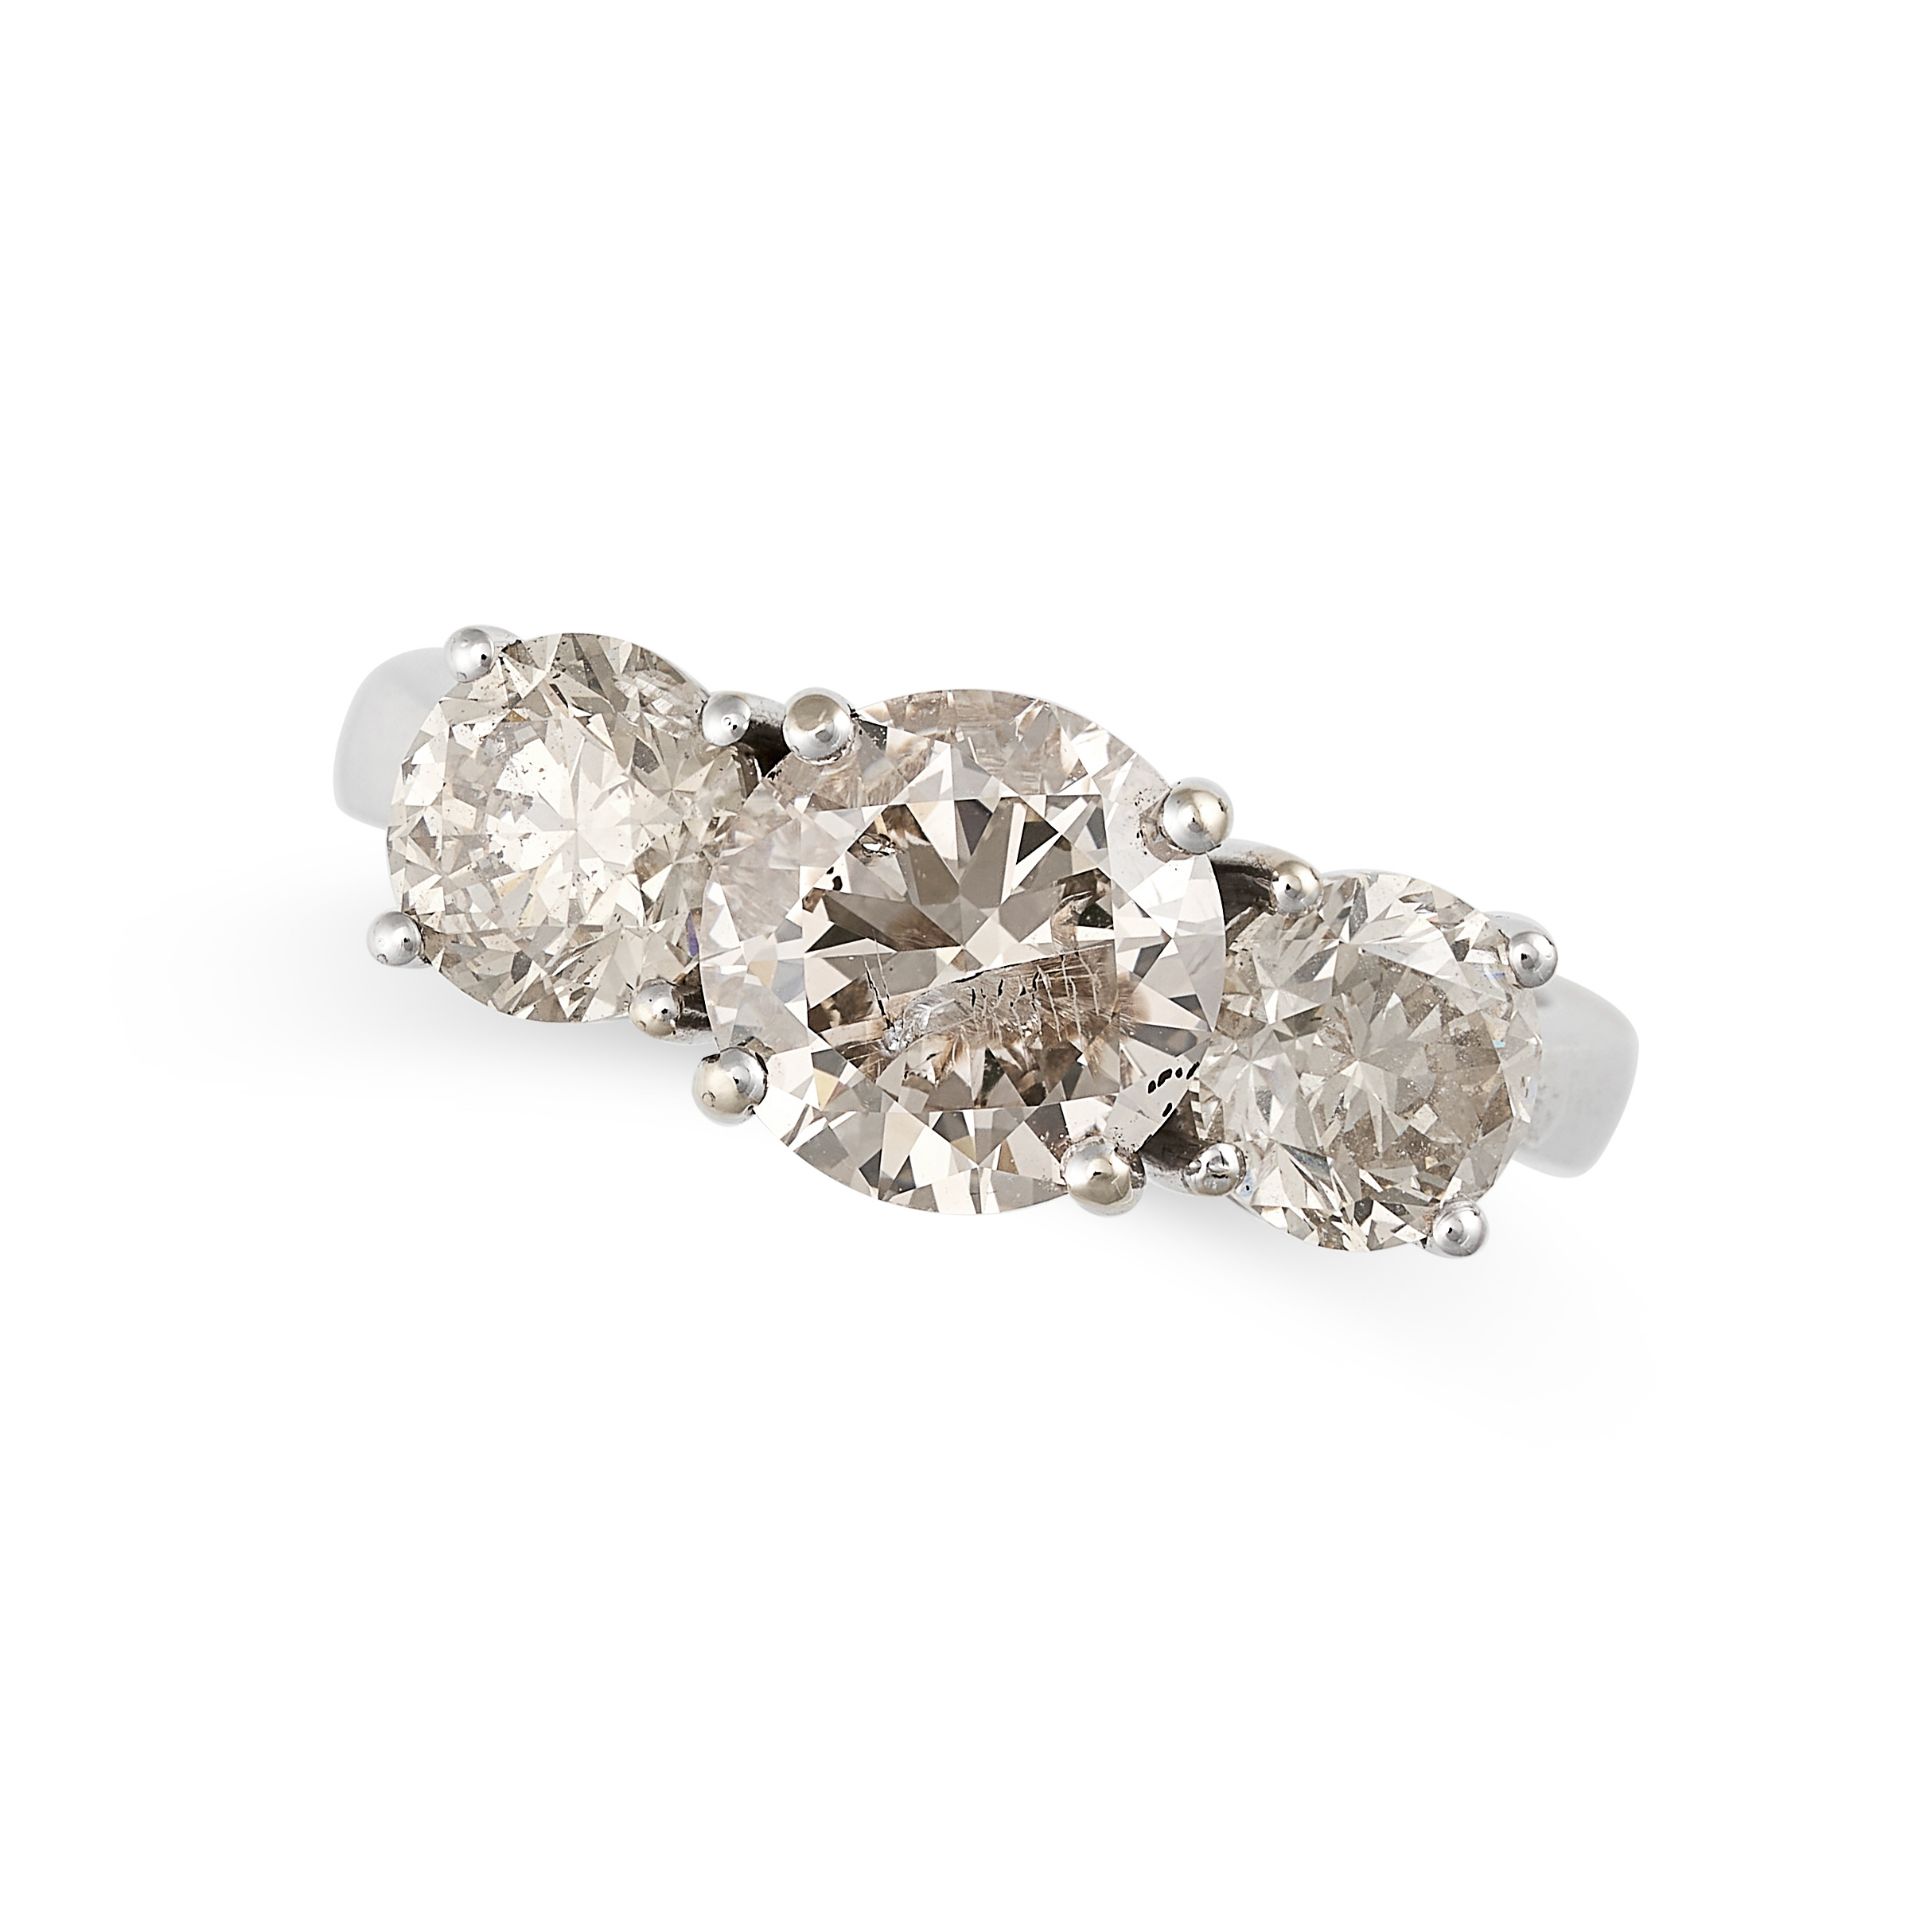 A DIAMOND THREE STONE RING in 18ct white gold, set with three round brilliant cut diamonds, the d...